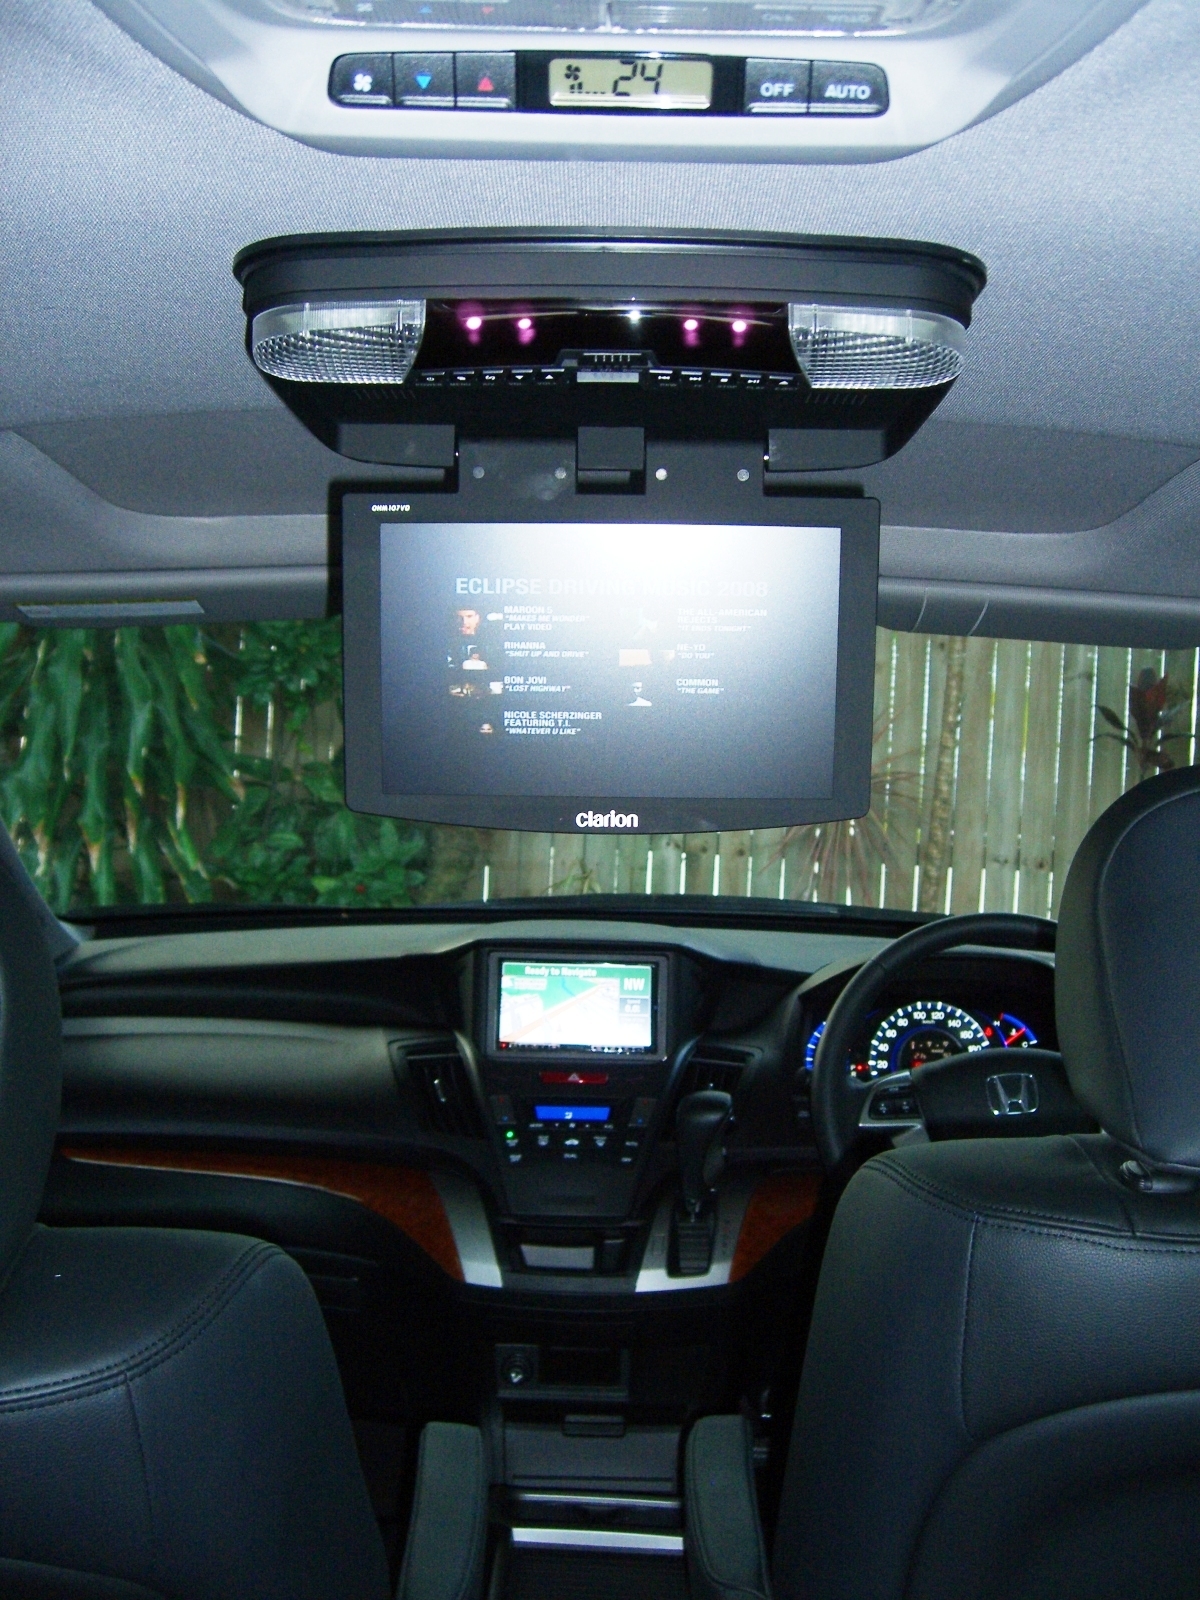 Honda Odyssey 2010 In dash GPS Navigation DVD Roof screen